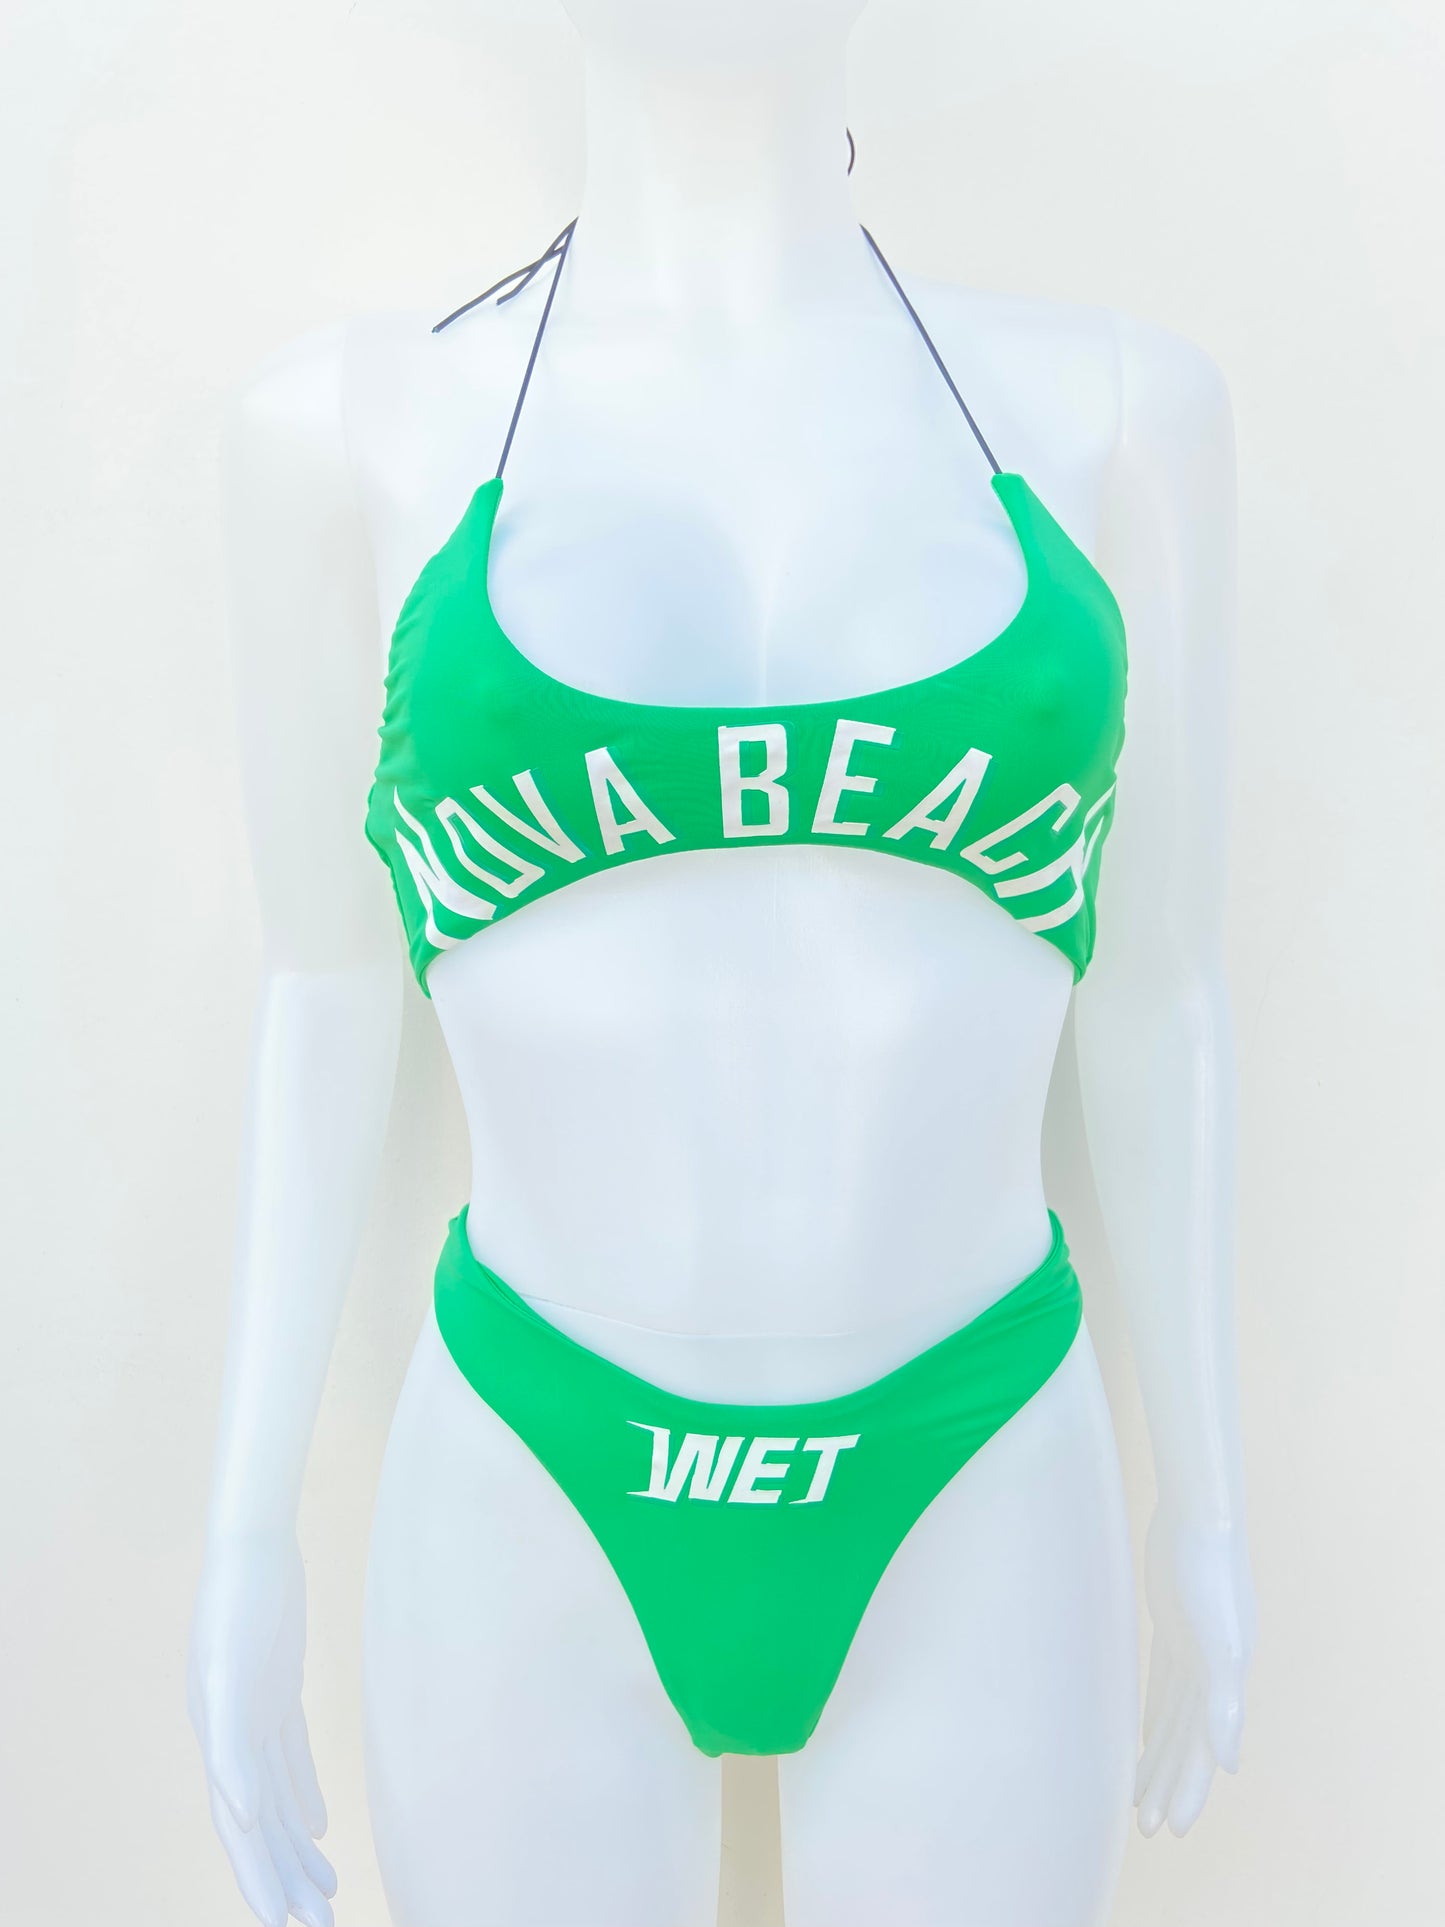 Biquini Fashion Nova original verde con letras NOVA BEACH en blanco.